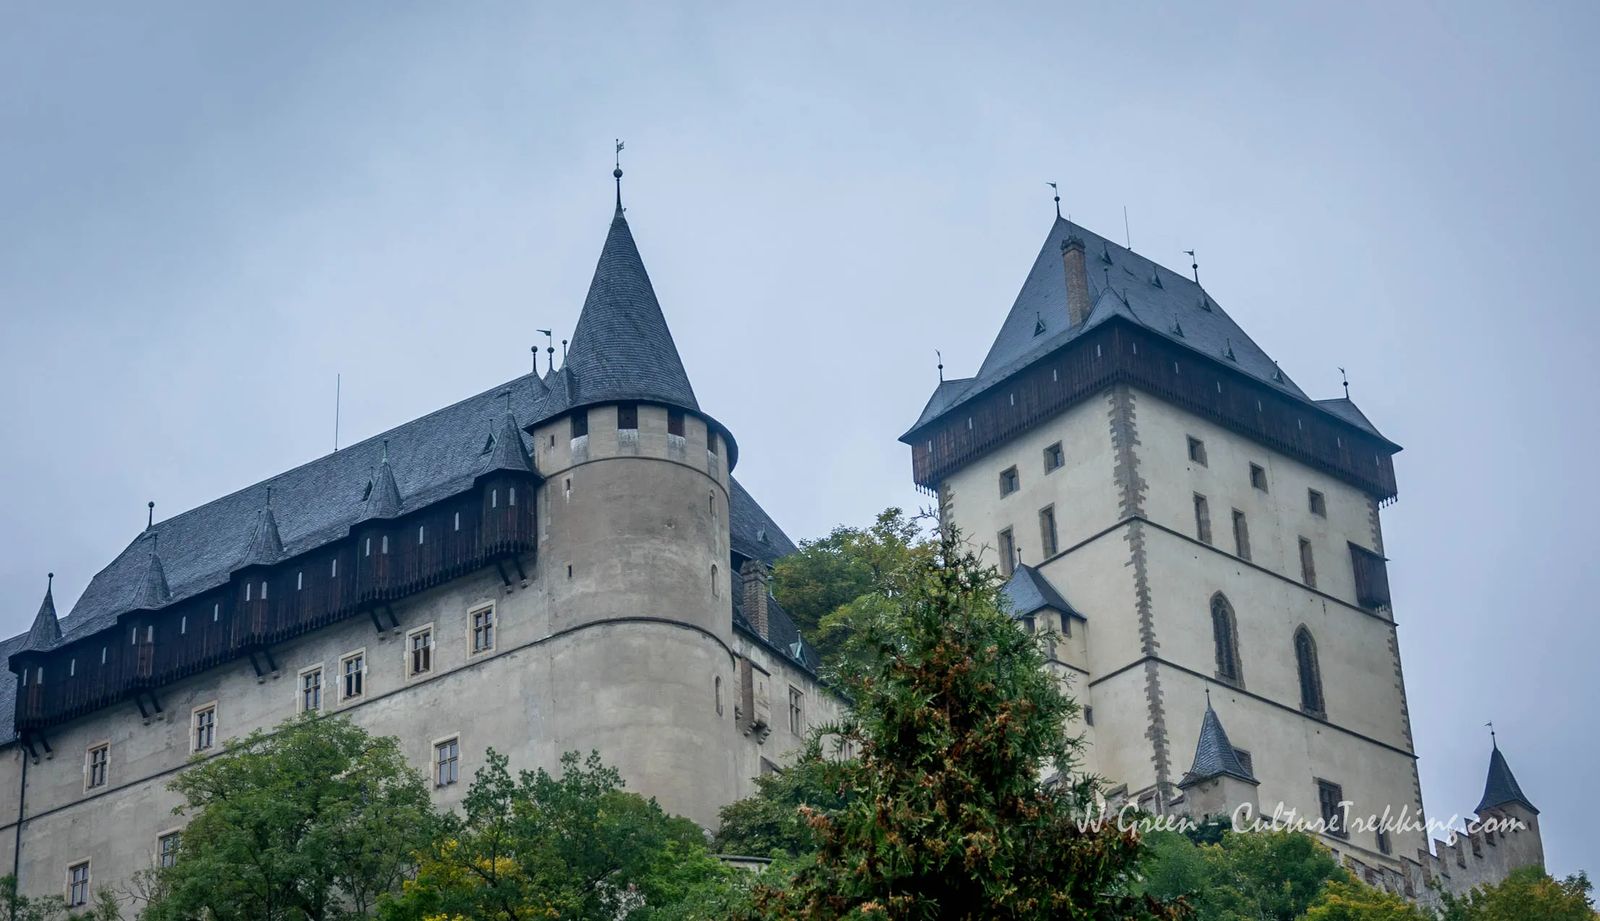 Karlstejn Castle in the Czech Republic. A storybook castle like none other in Europe..